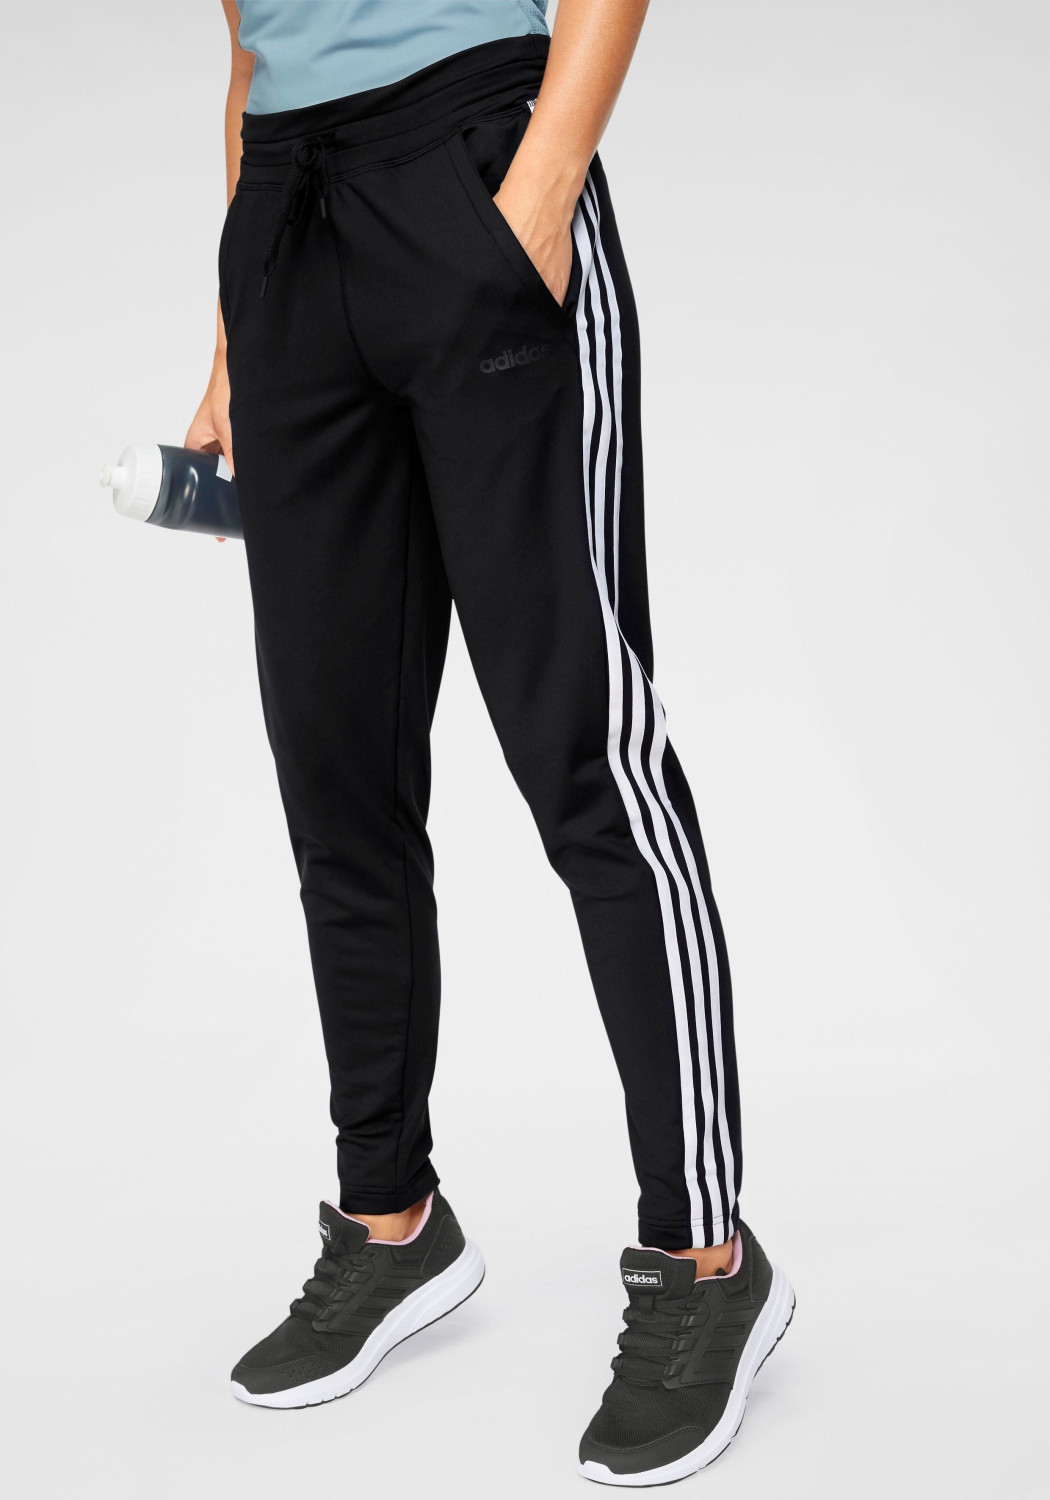 Verstrooien overdrijven een keer Adidas Women Training Design 2 Move 3-Stripes Joggers black/white (DS8732)  ab 34,99 € | Preisvergleich bei idealo.de